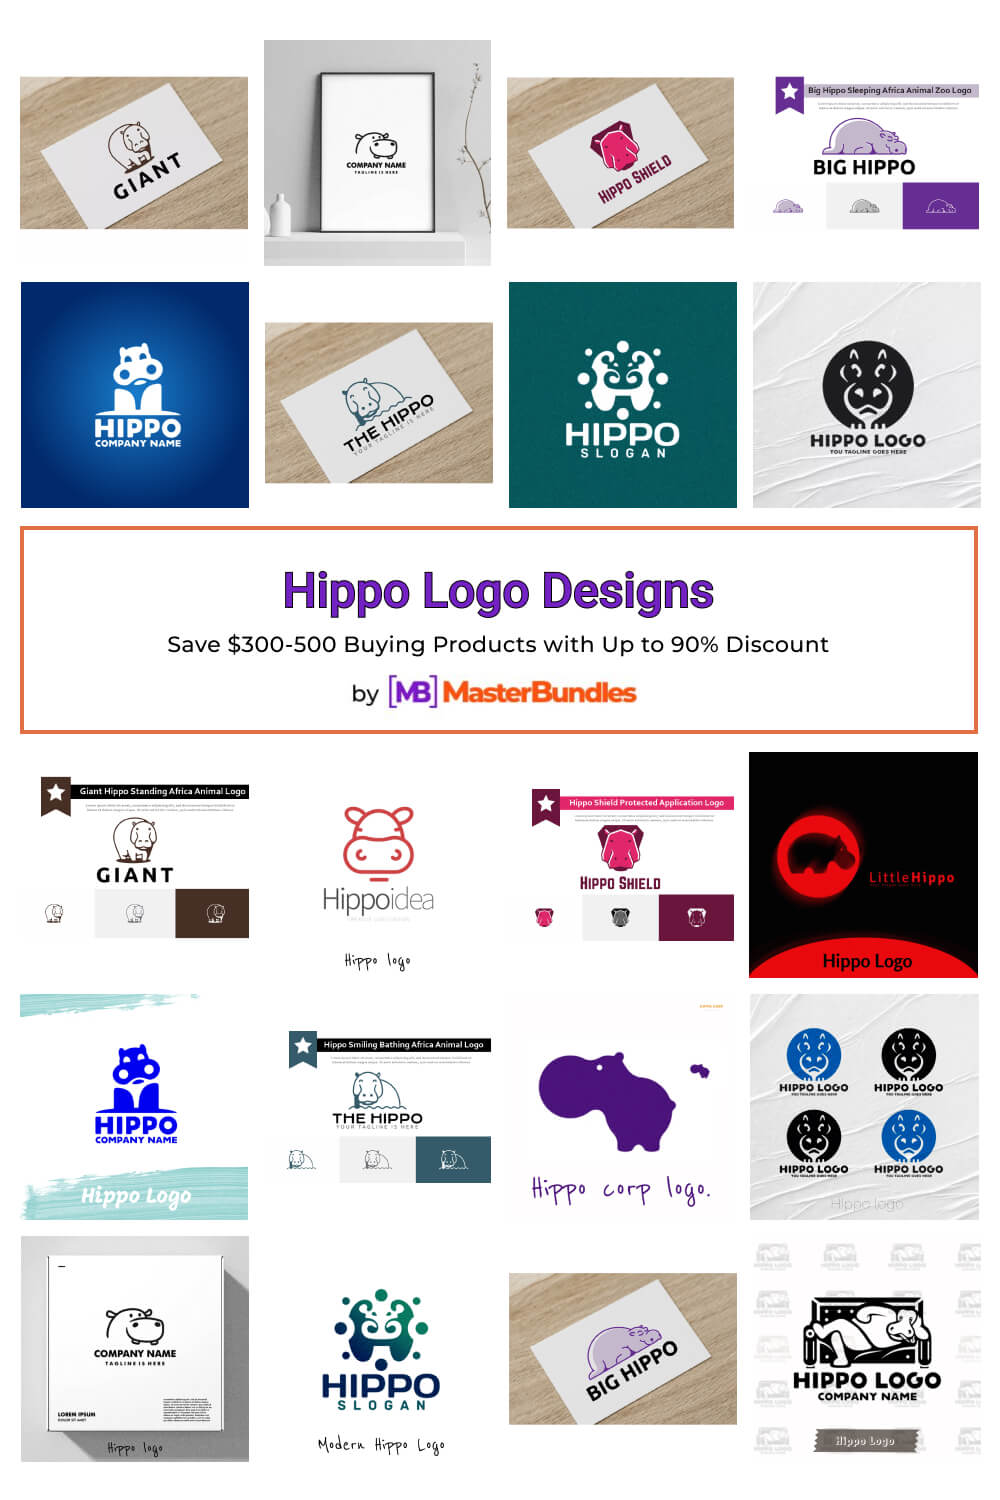 hippo logo designs pinterest image.